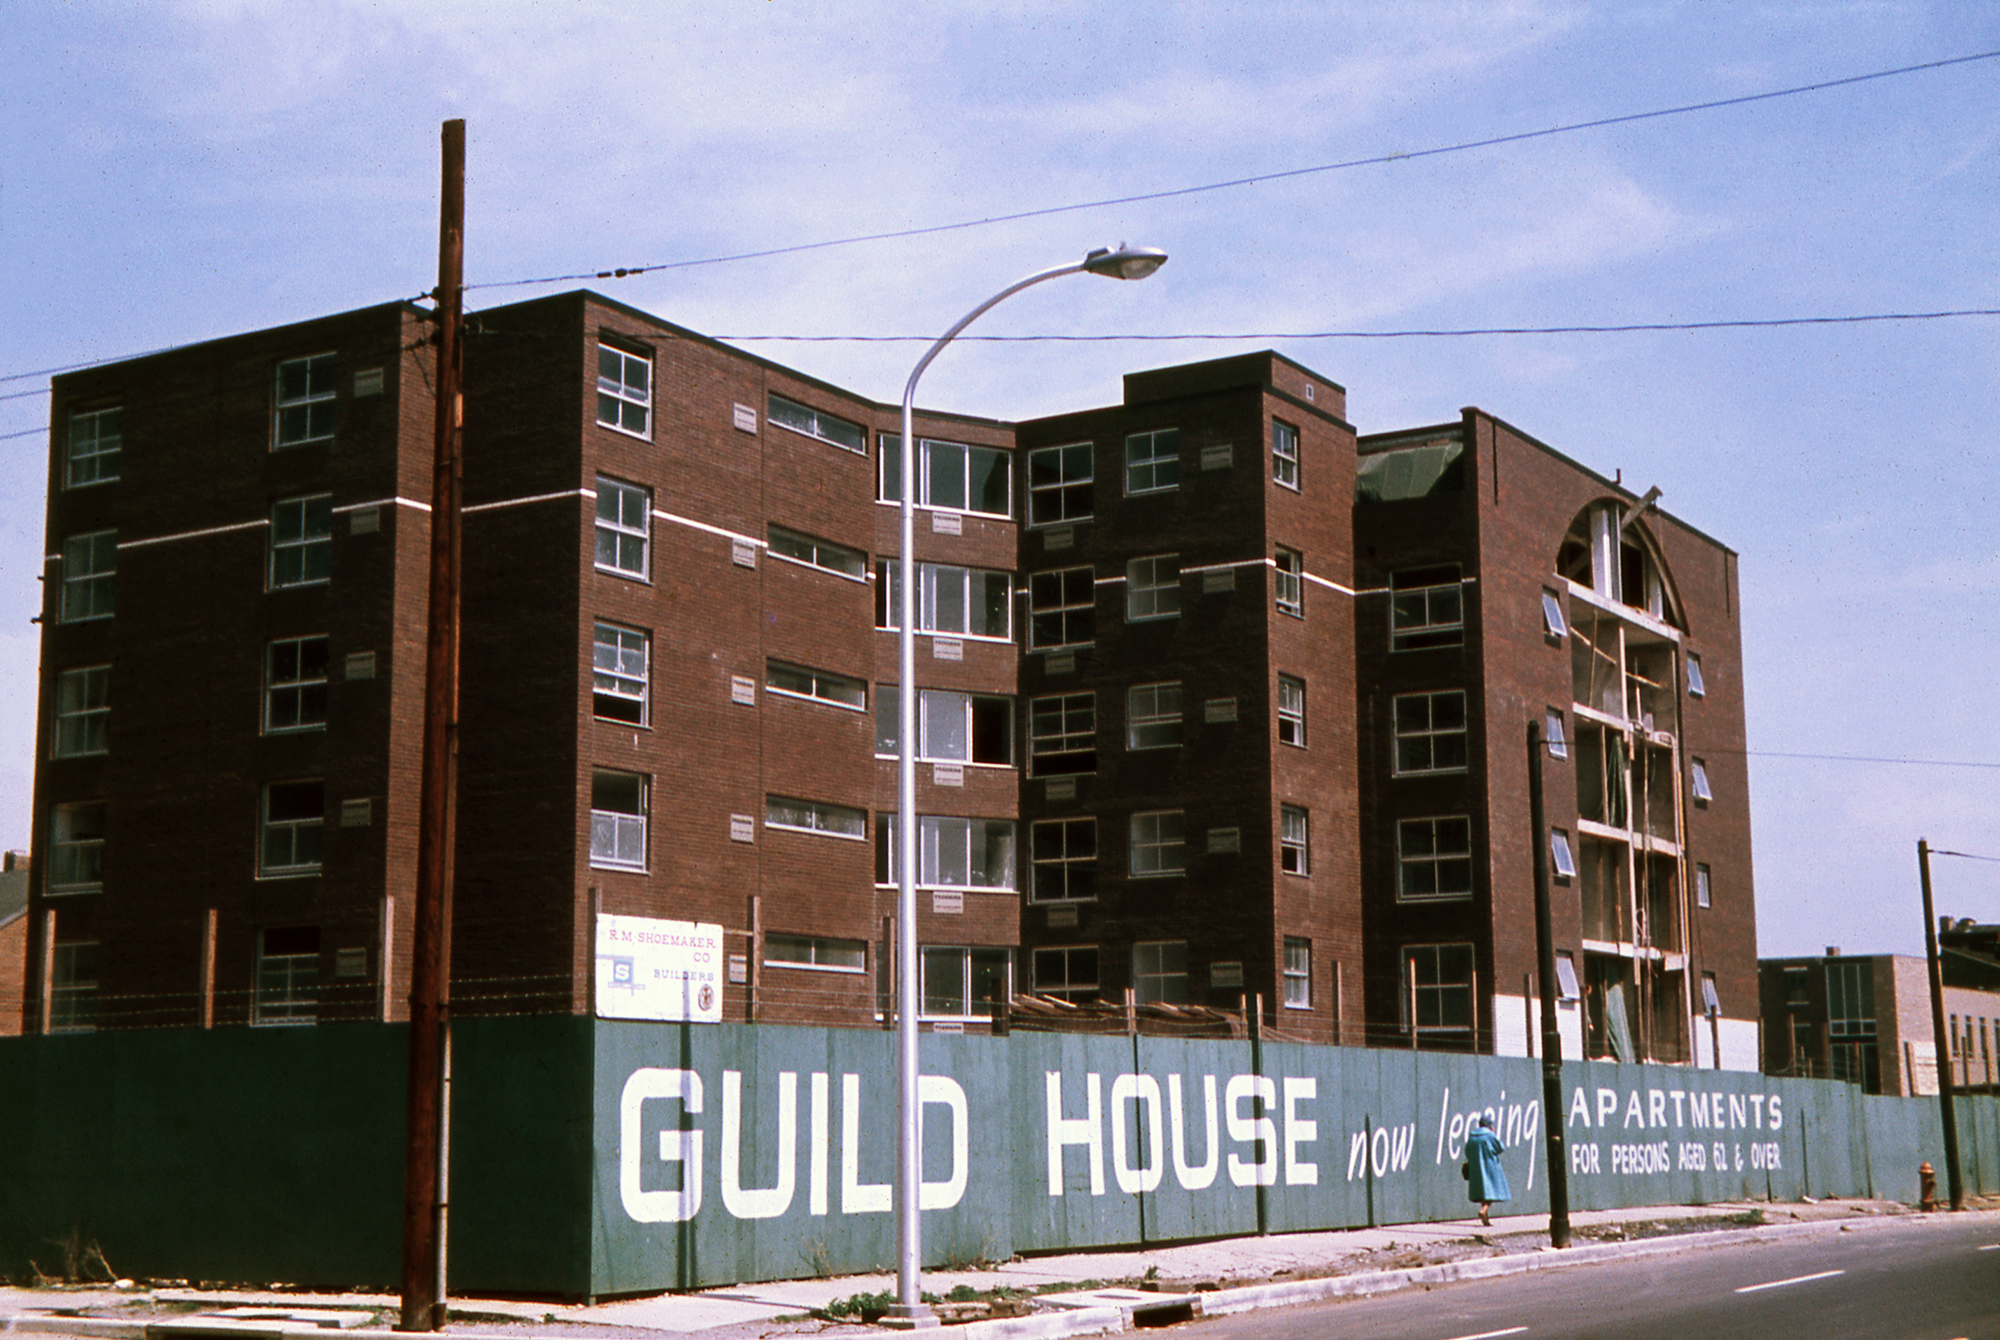 Color photo of an apartment complex under construction